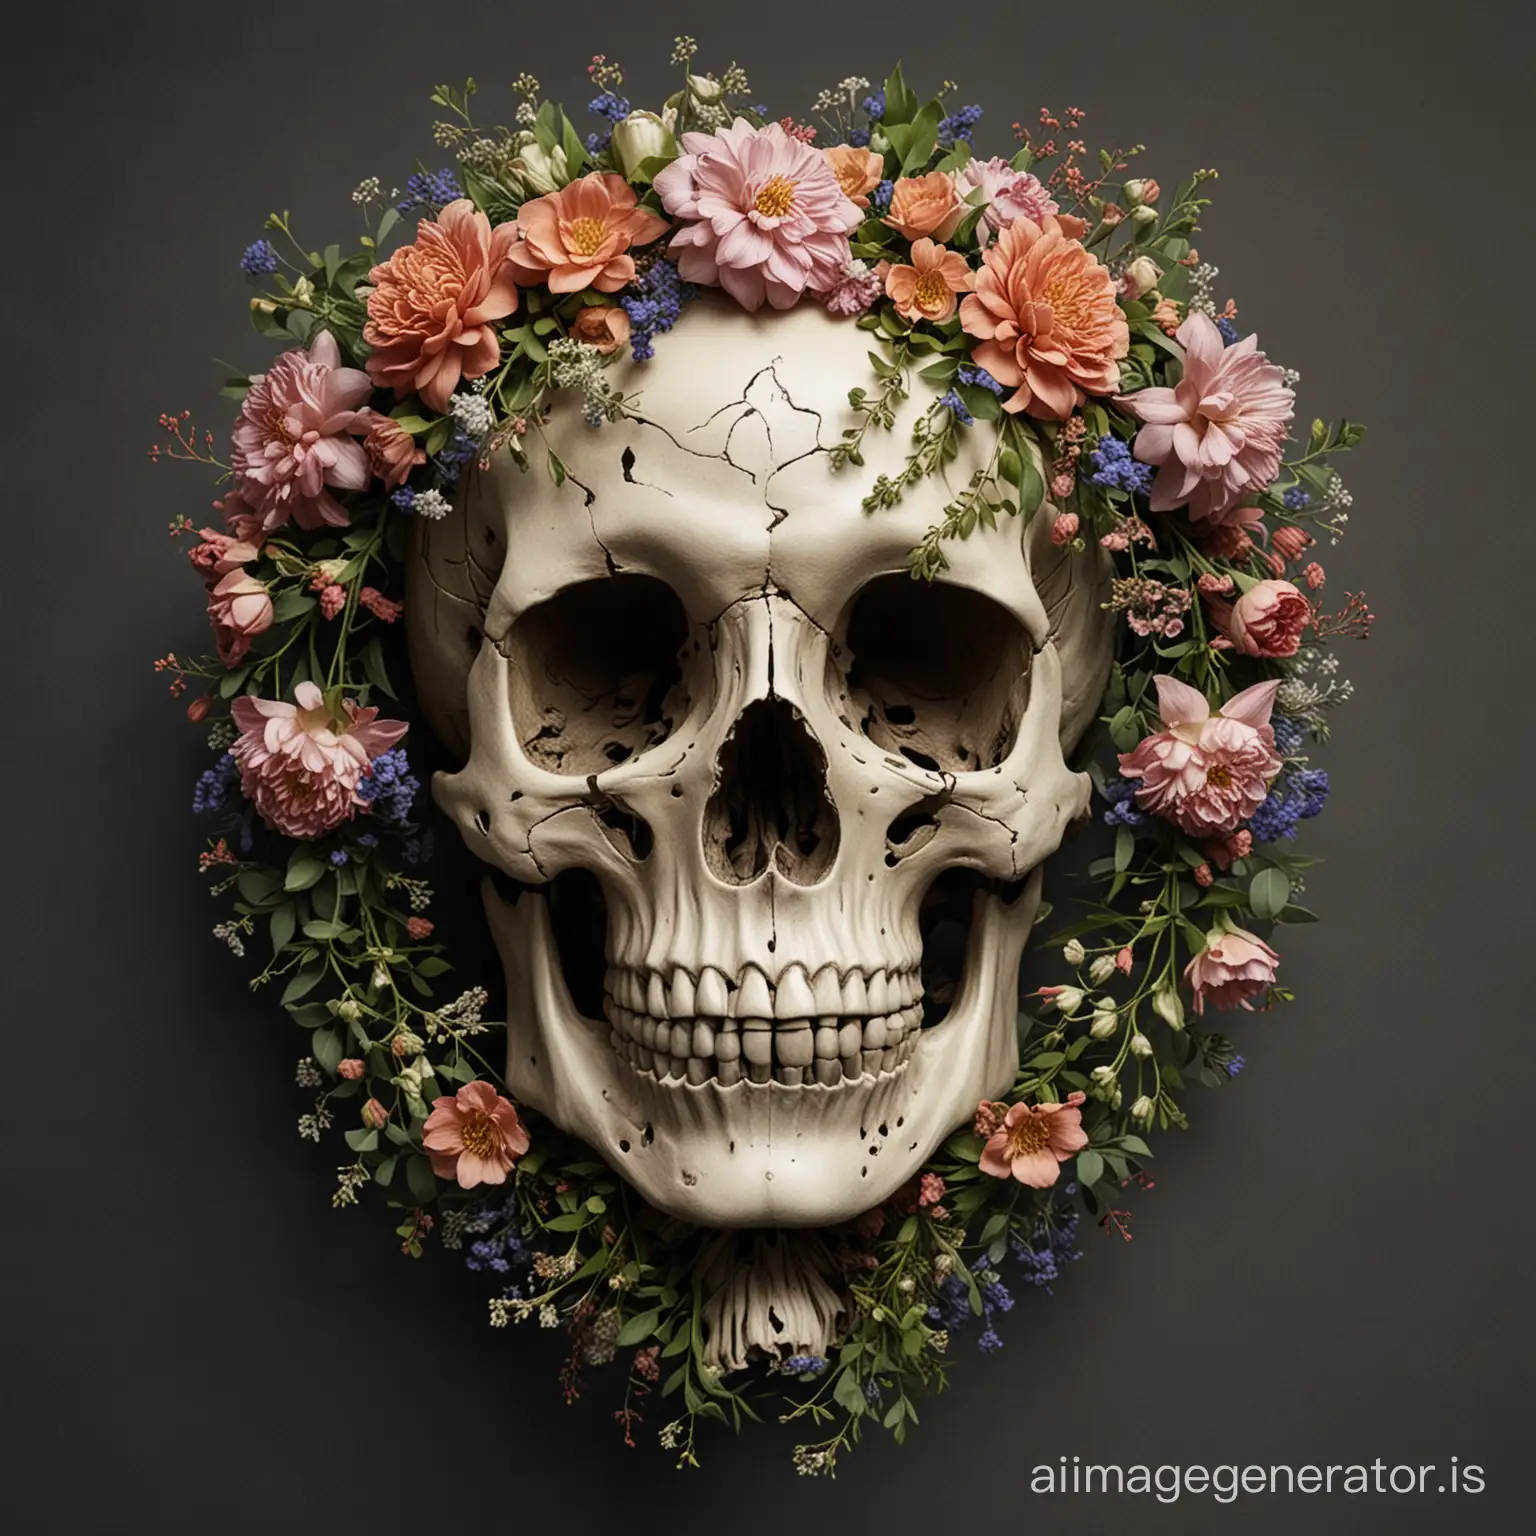 Floral-Arrangement-with-Skeleton-Head-Centerpiece